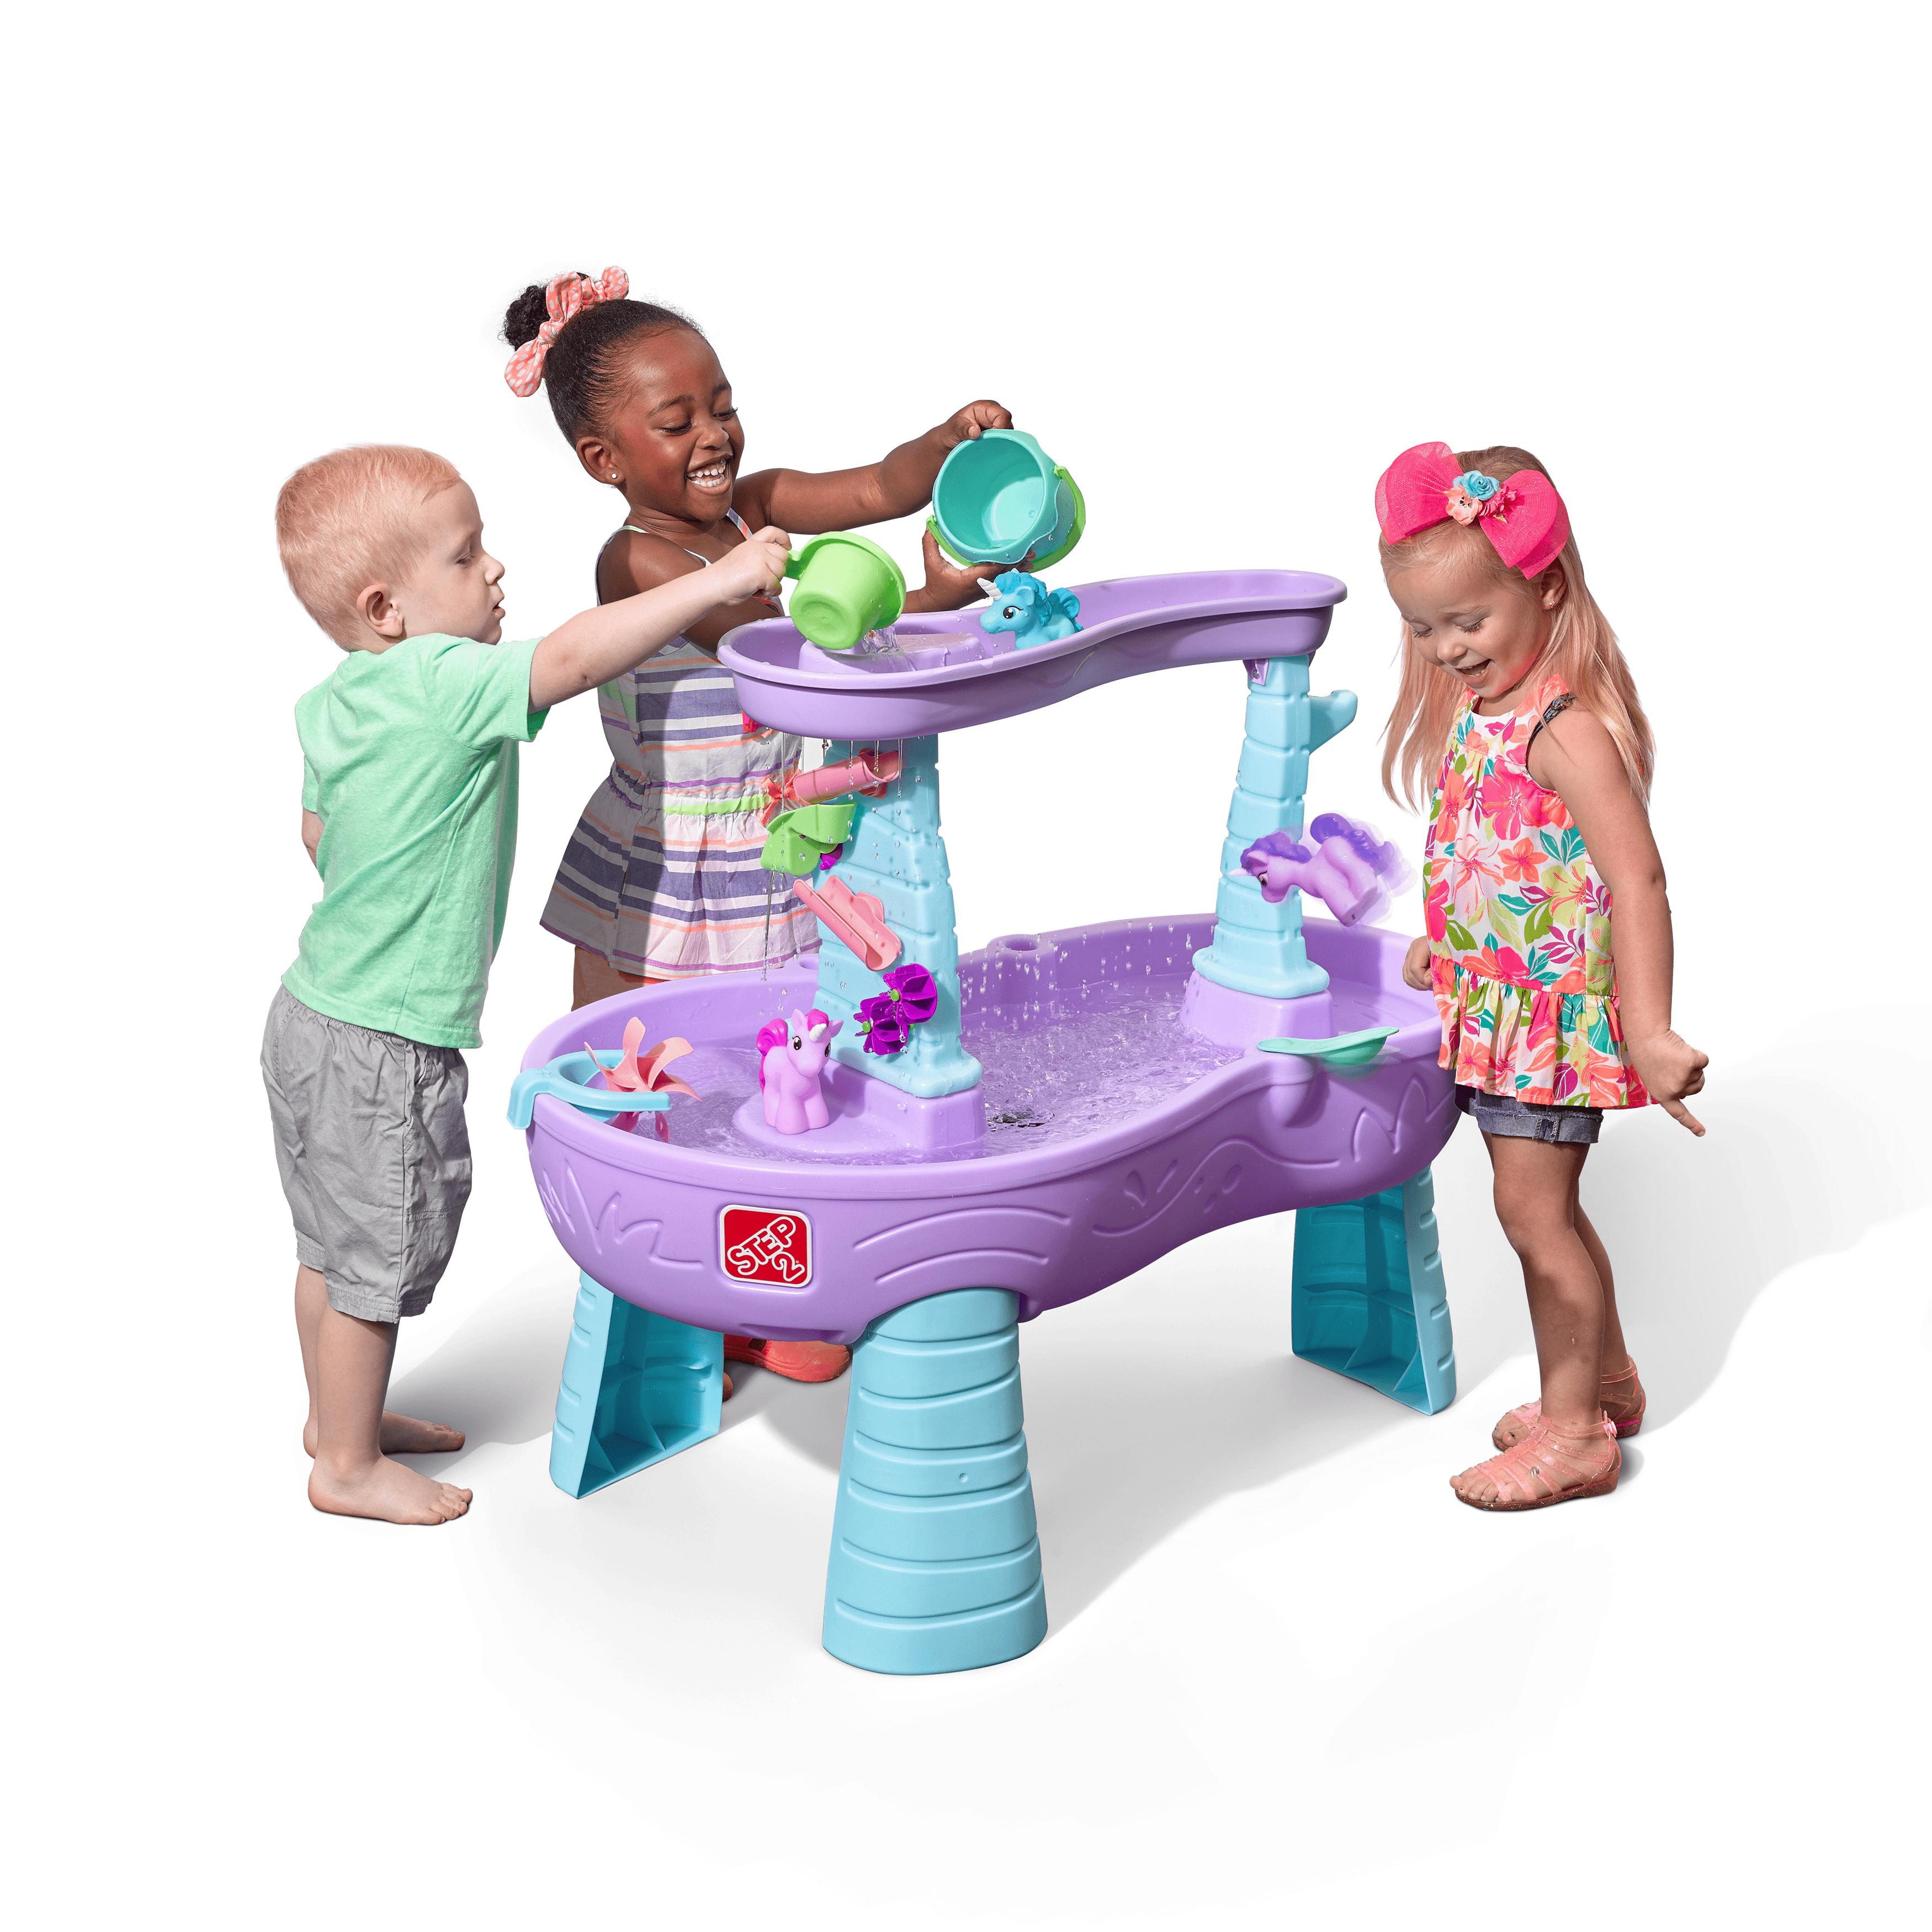 kids unicorn table